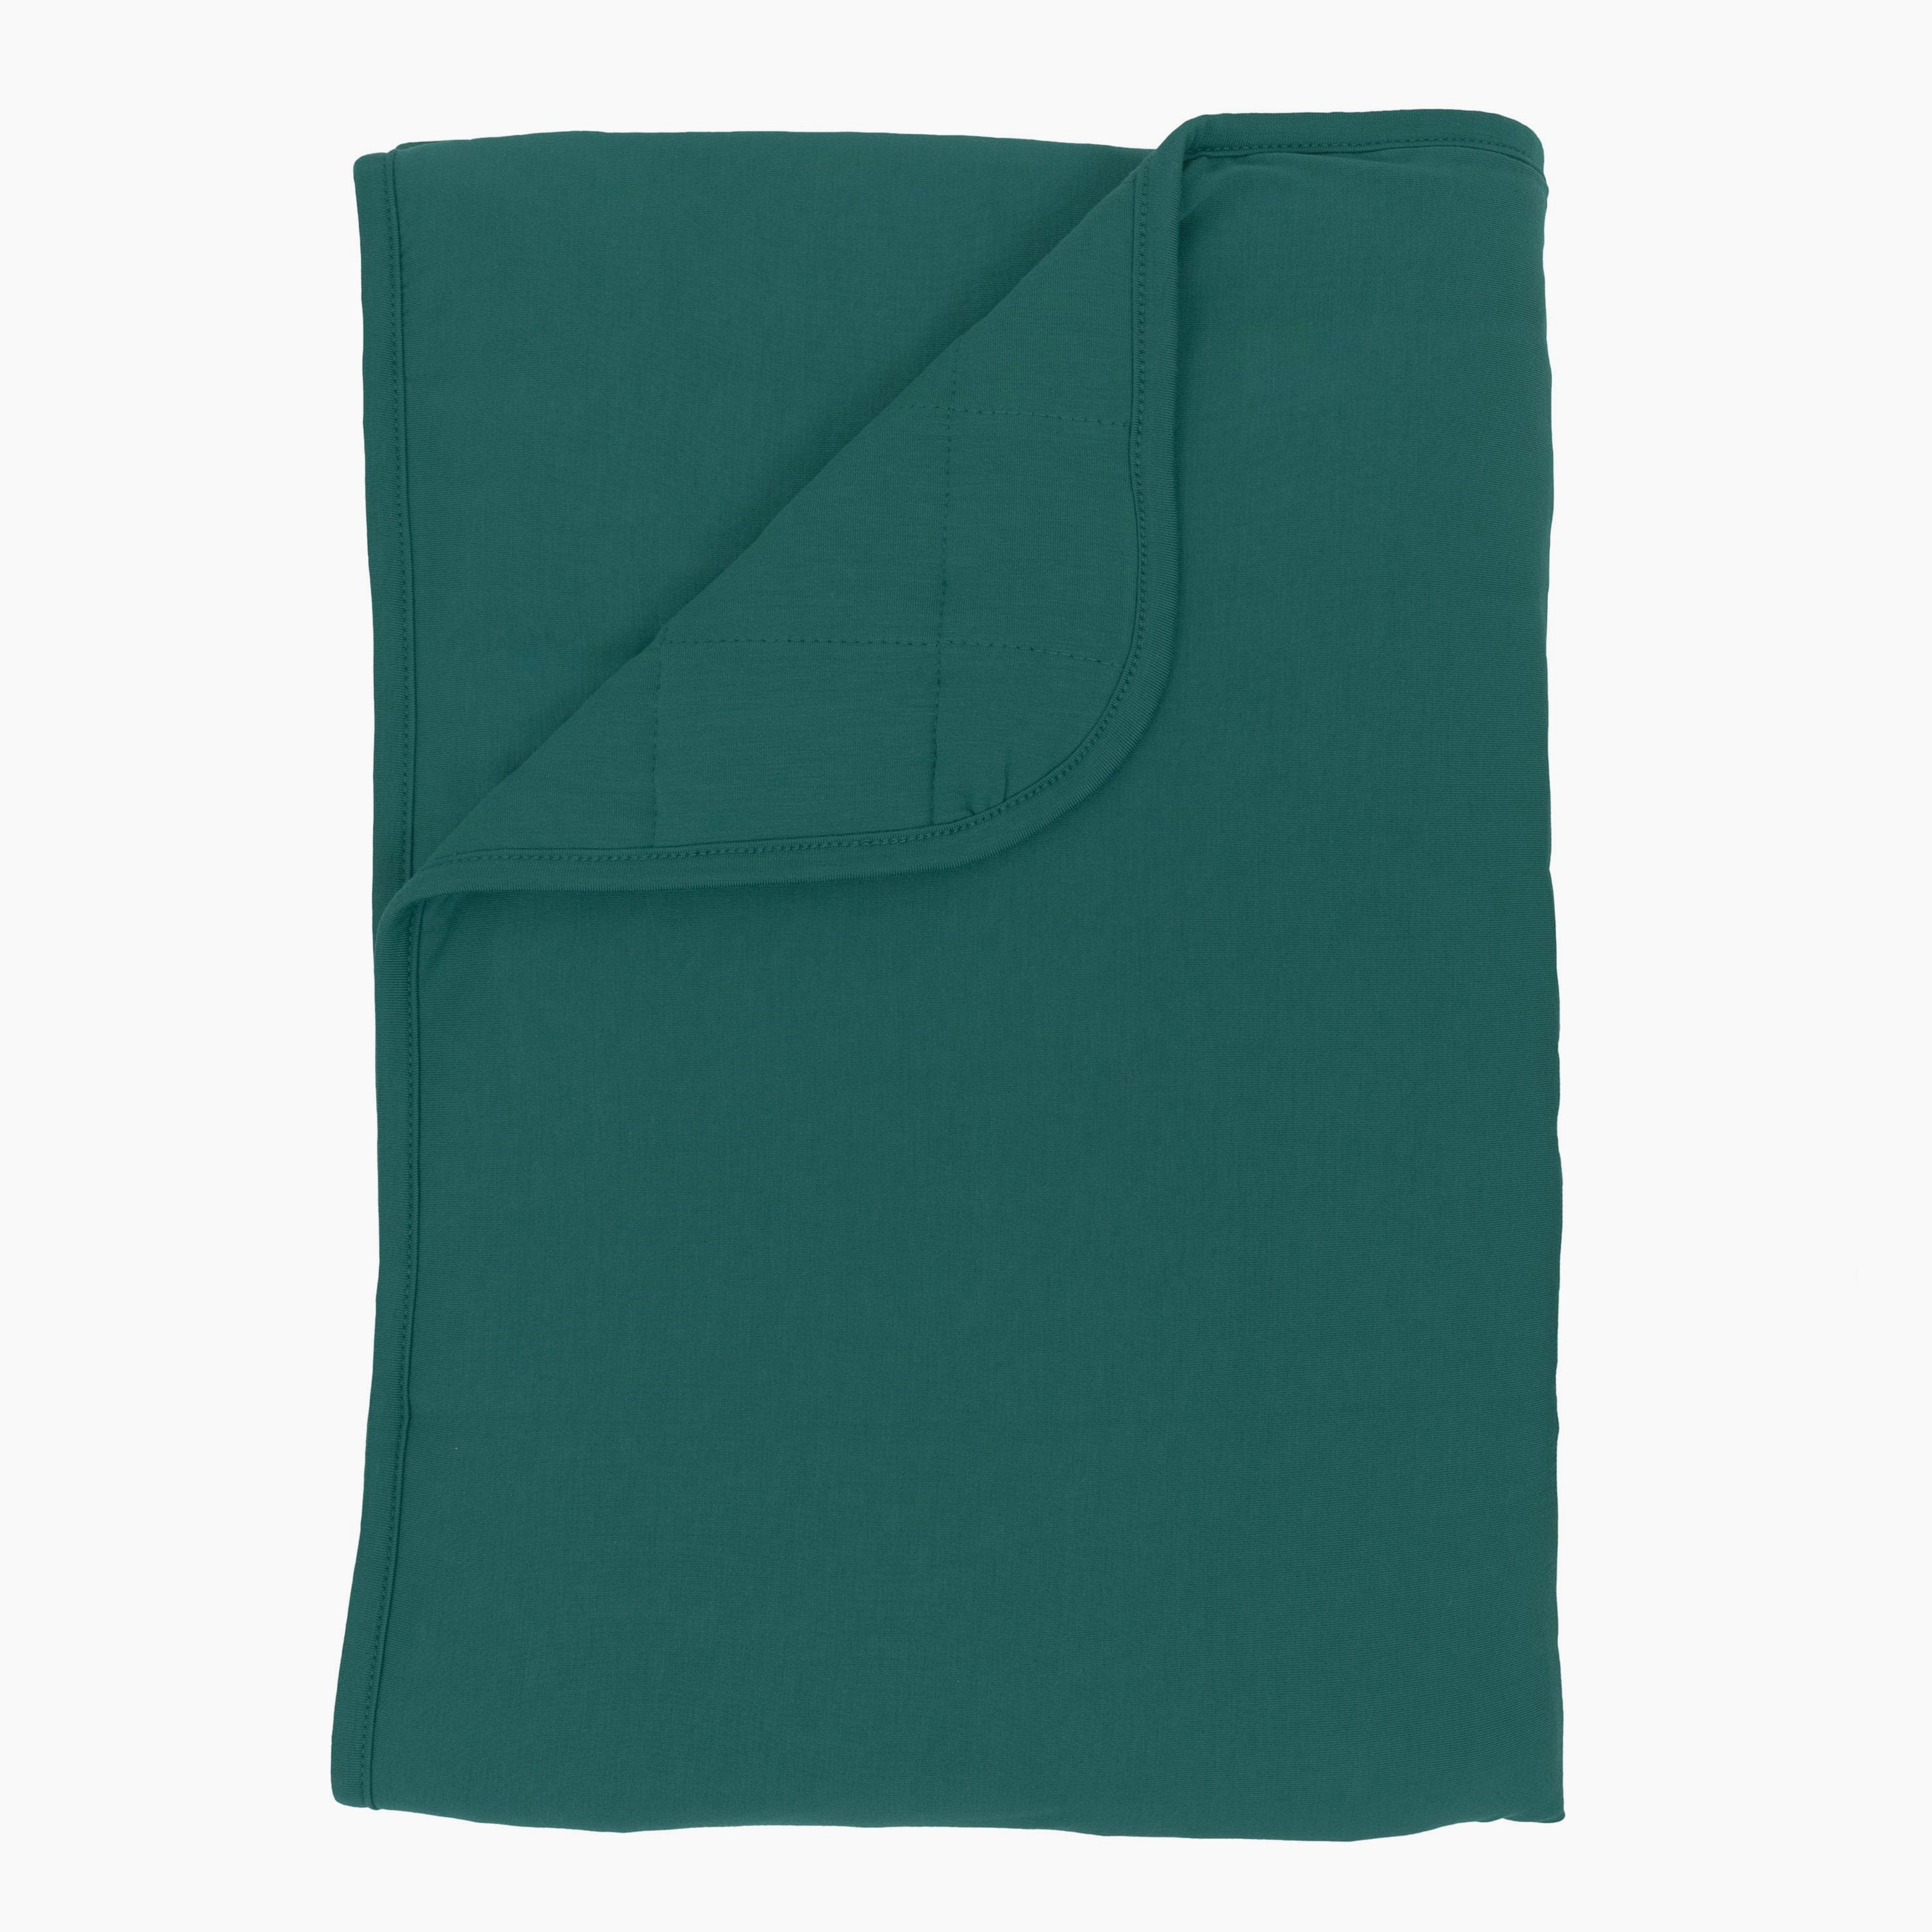 Toddler Blanket in Emerald 2.5